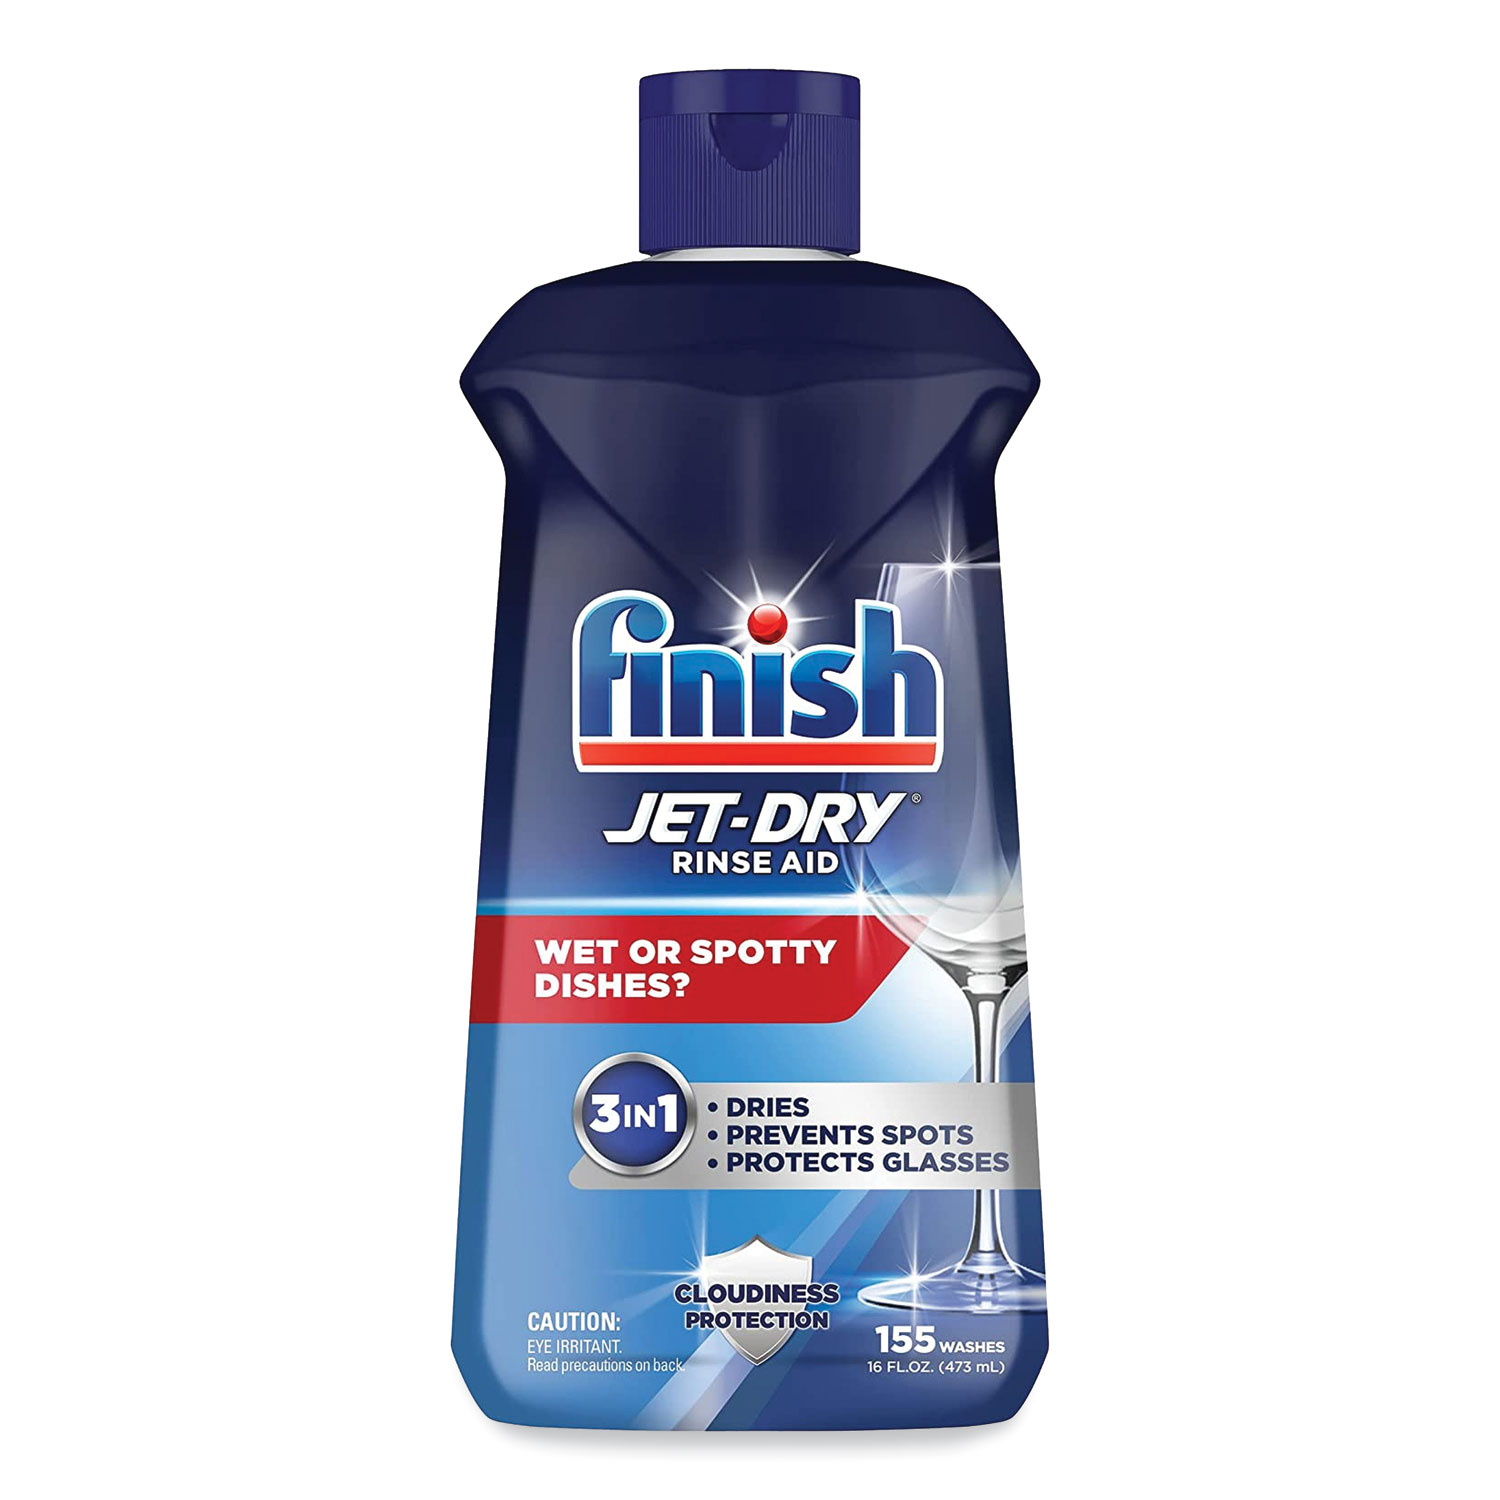 FINISH® Powerball® Deep Clean Dishwashing Tabs - 94 ct.